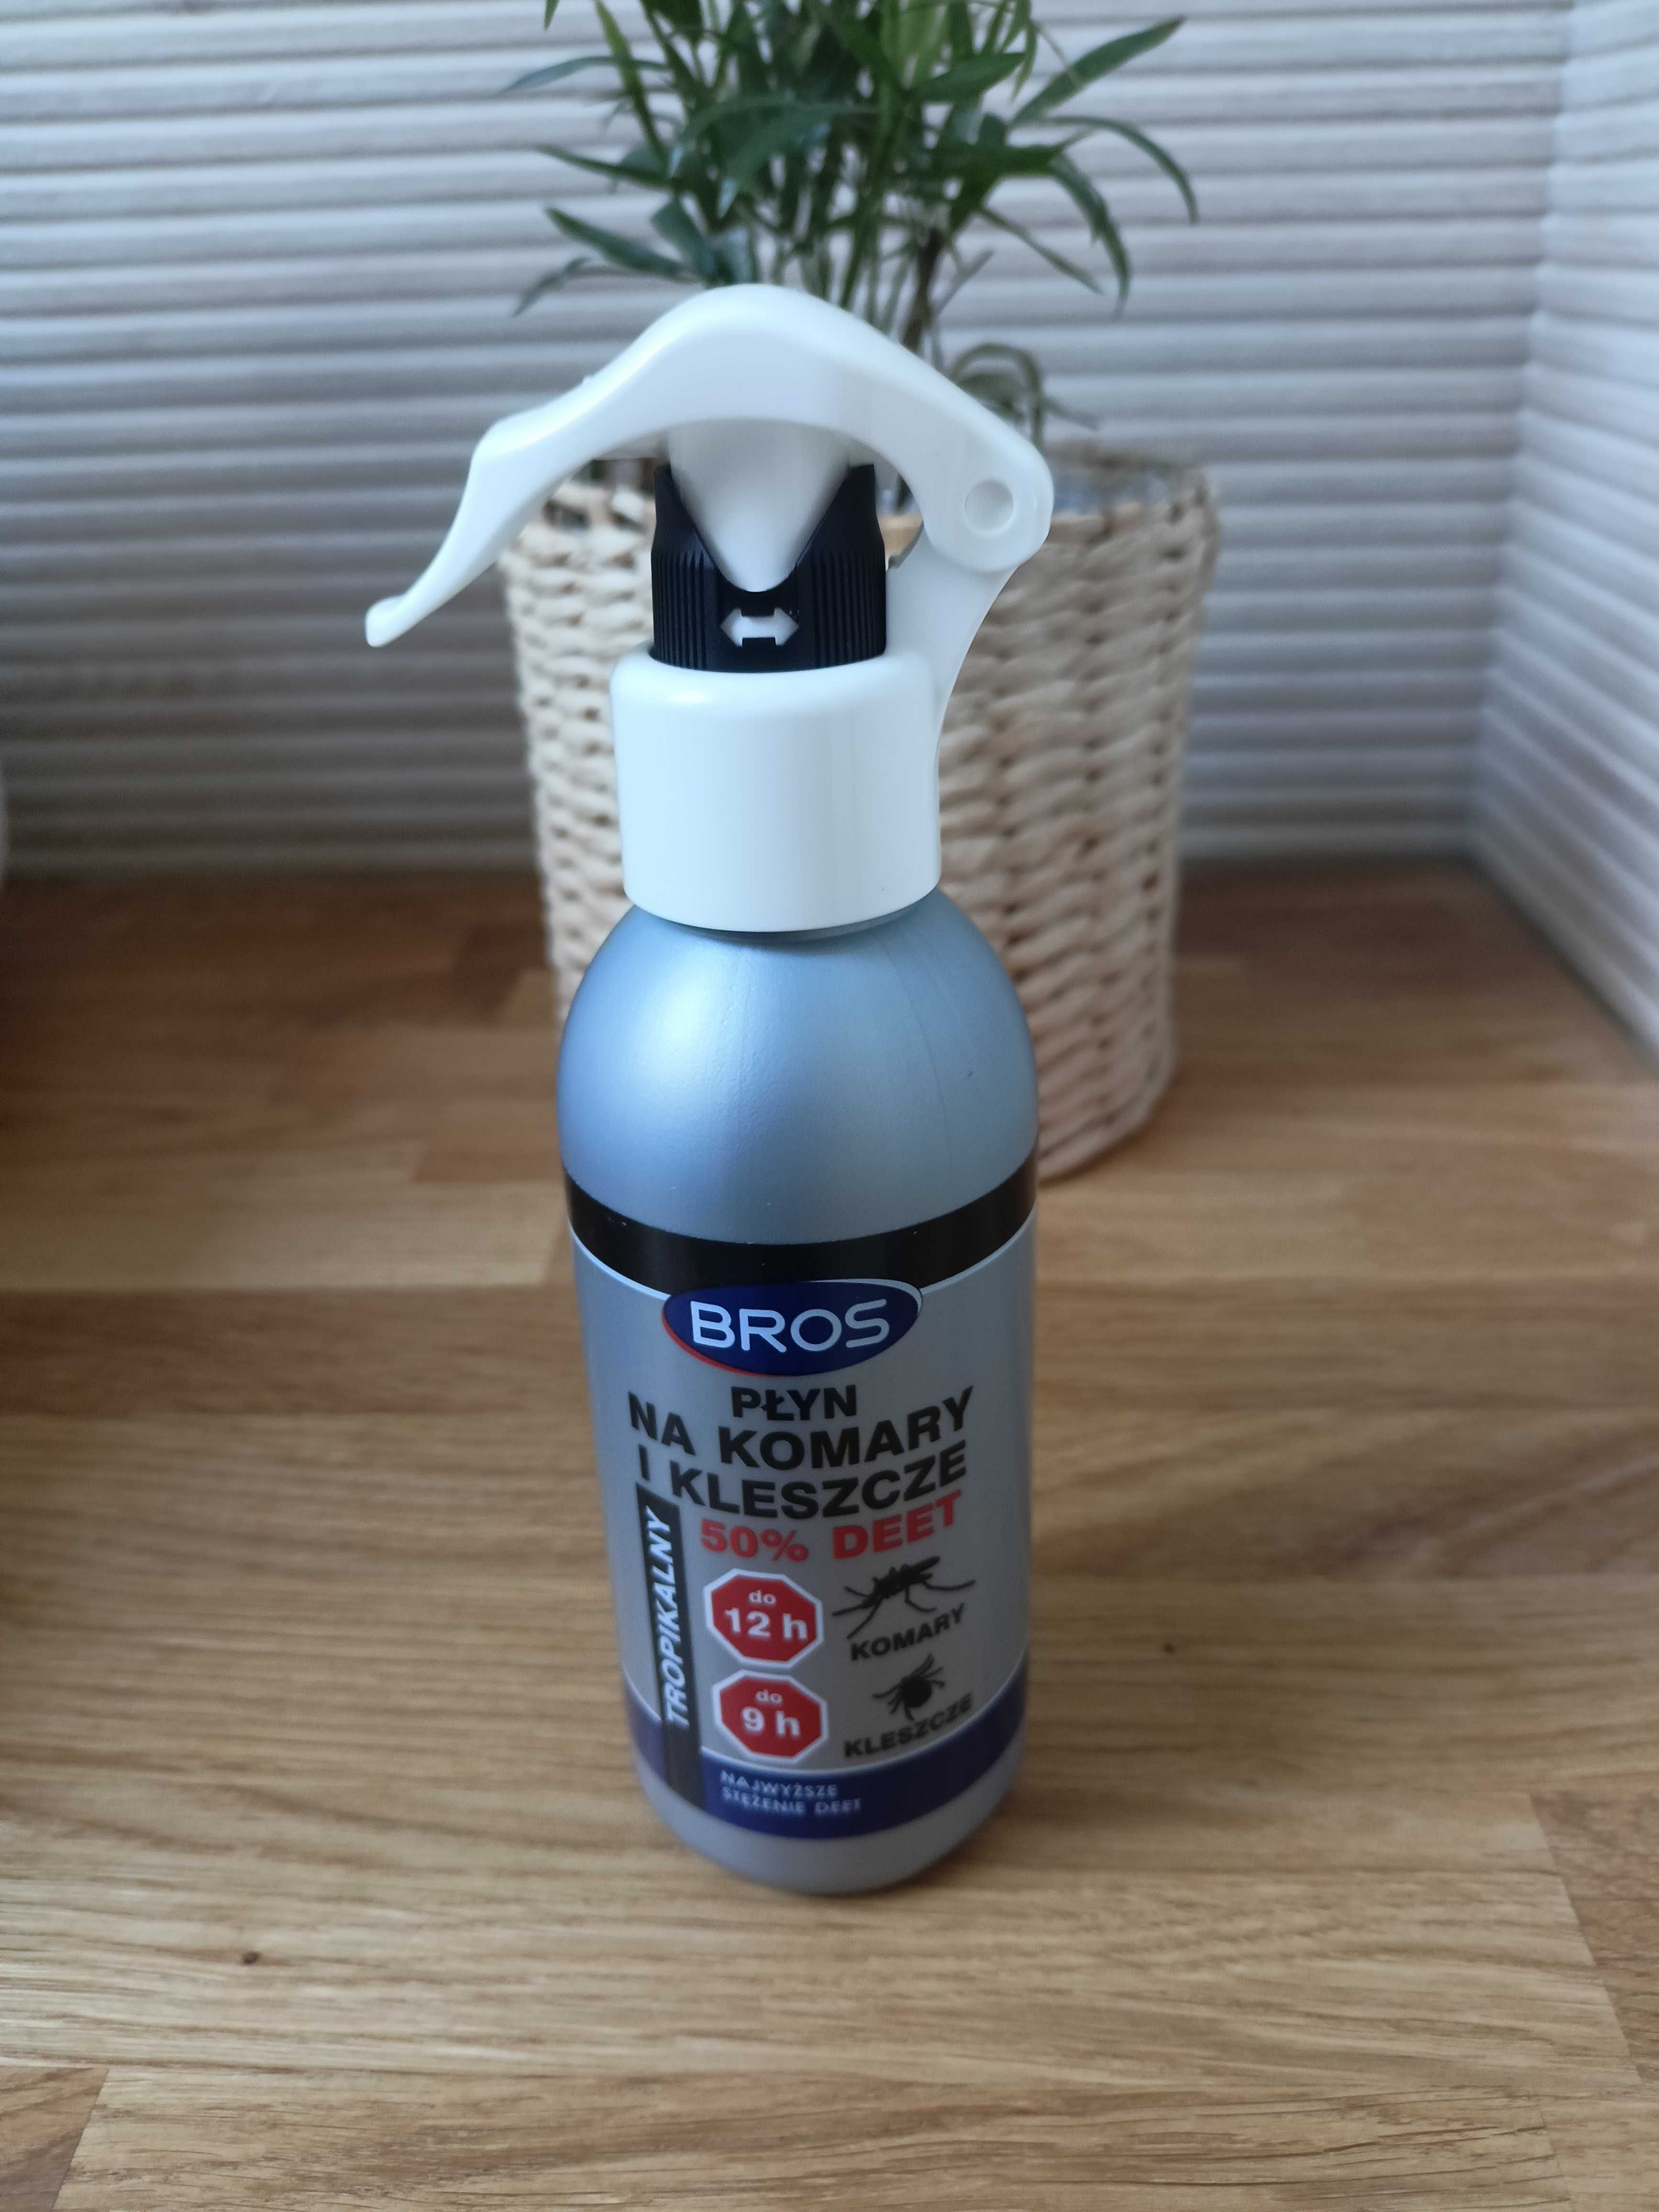 Spray na komary i kleszcze Bros 50% deet 130 ml repelent jak Mugga 2x